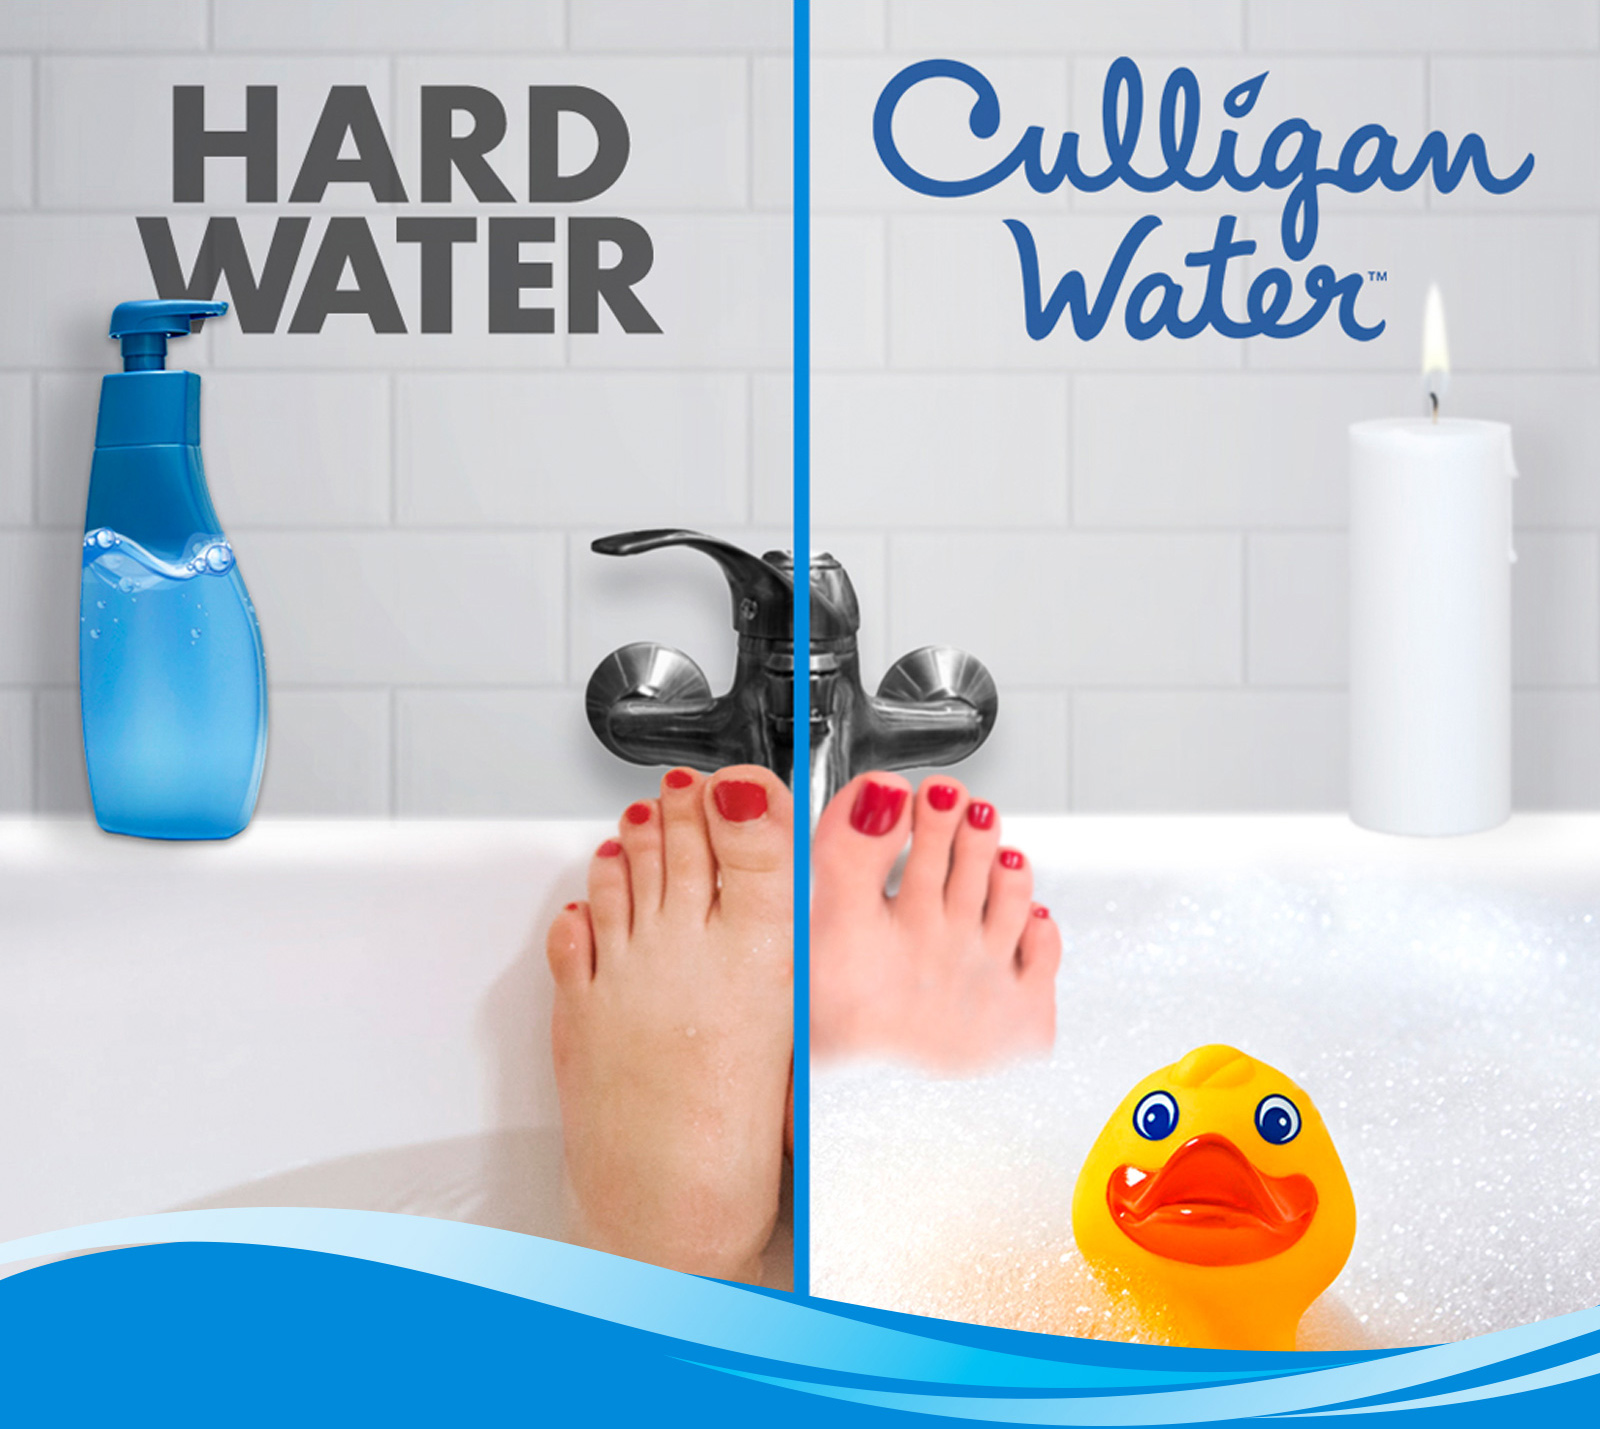 Hard Water vs. Cullig